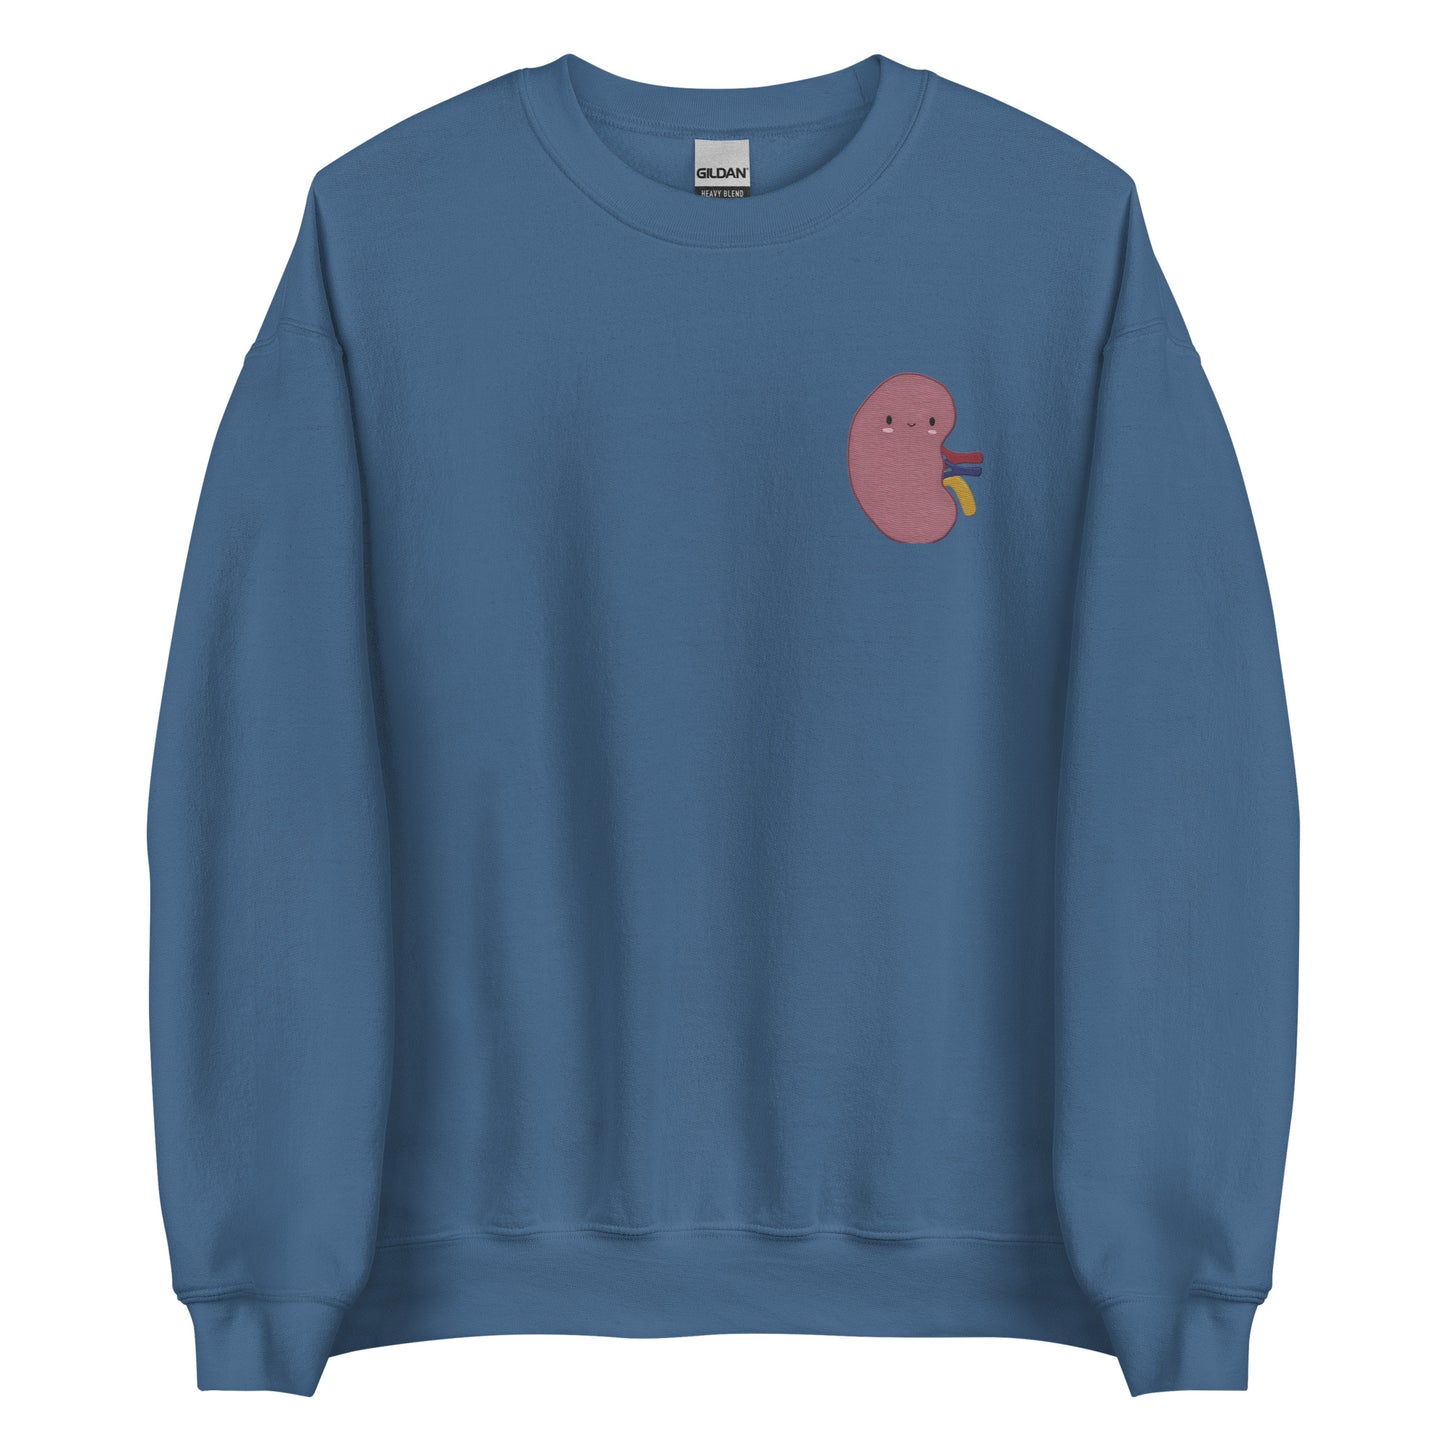 KIDNEY Embroidered Sweatshirt